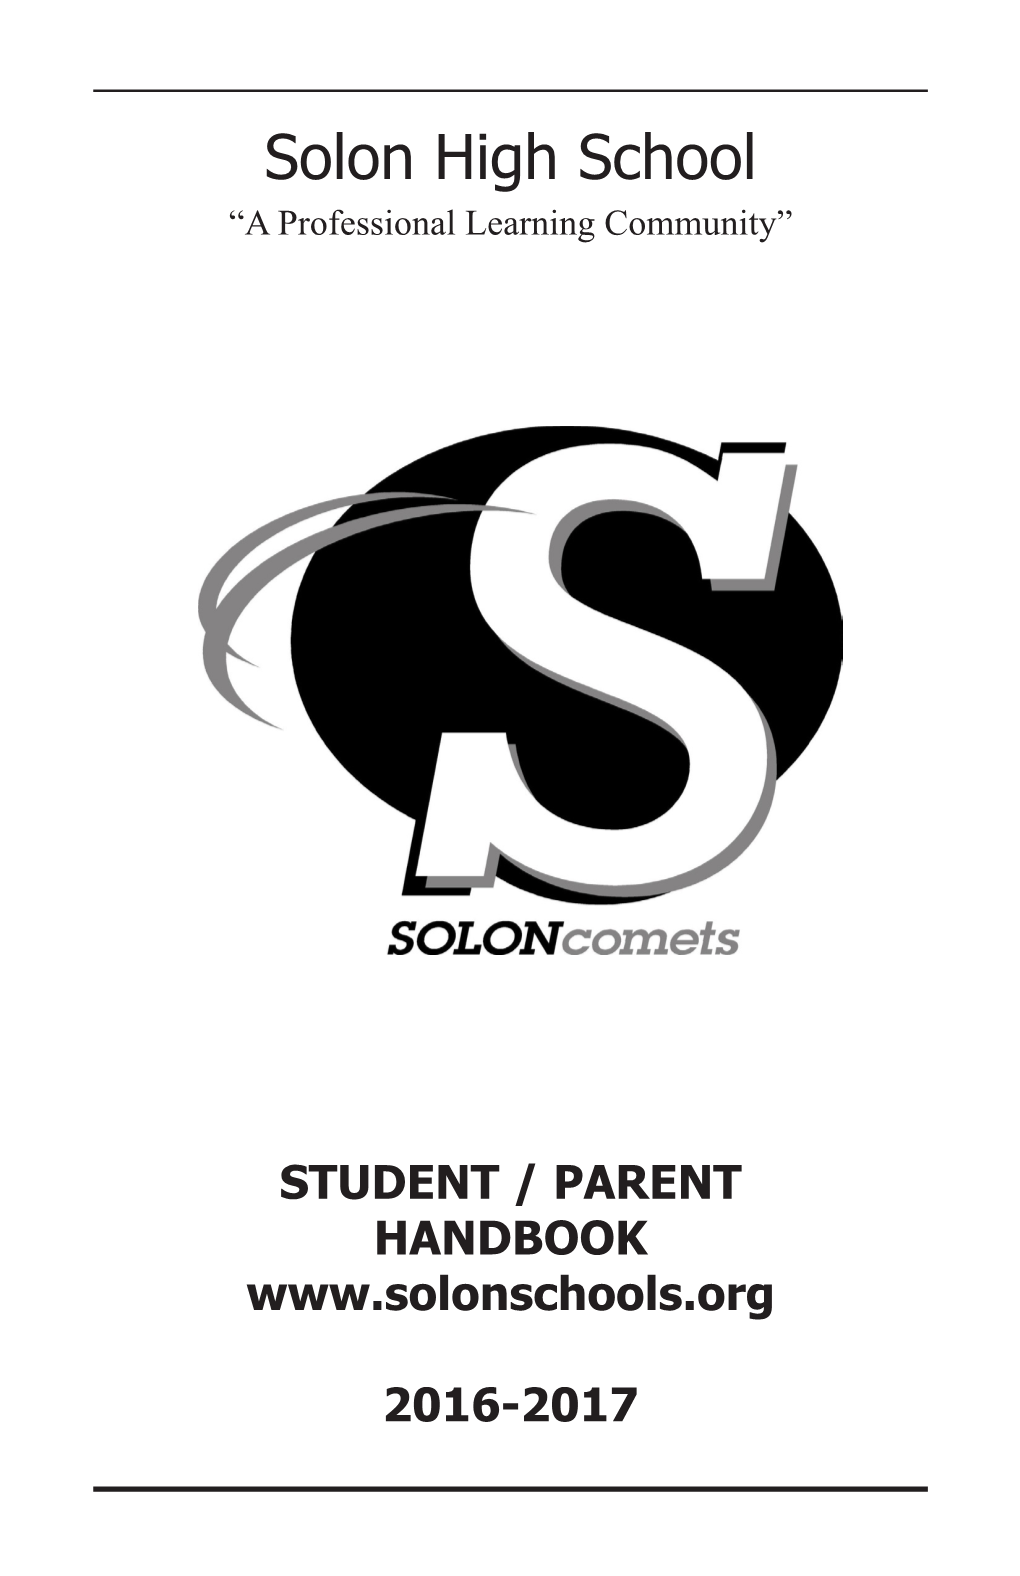 Solon High School “A Professional Learning Community”